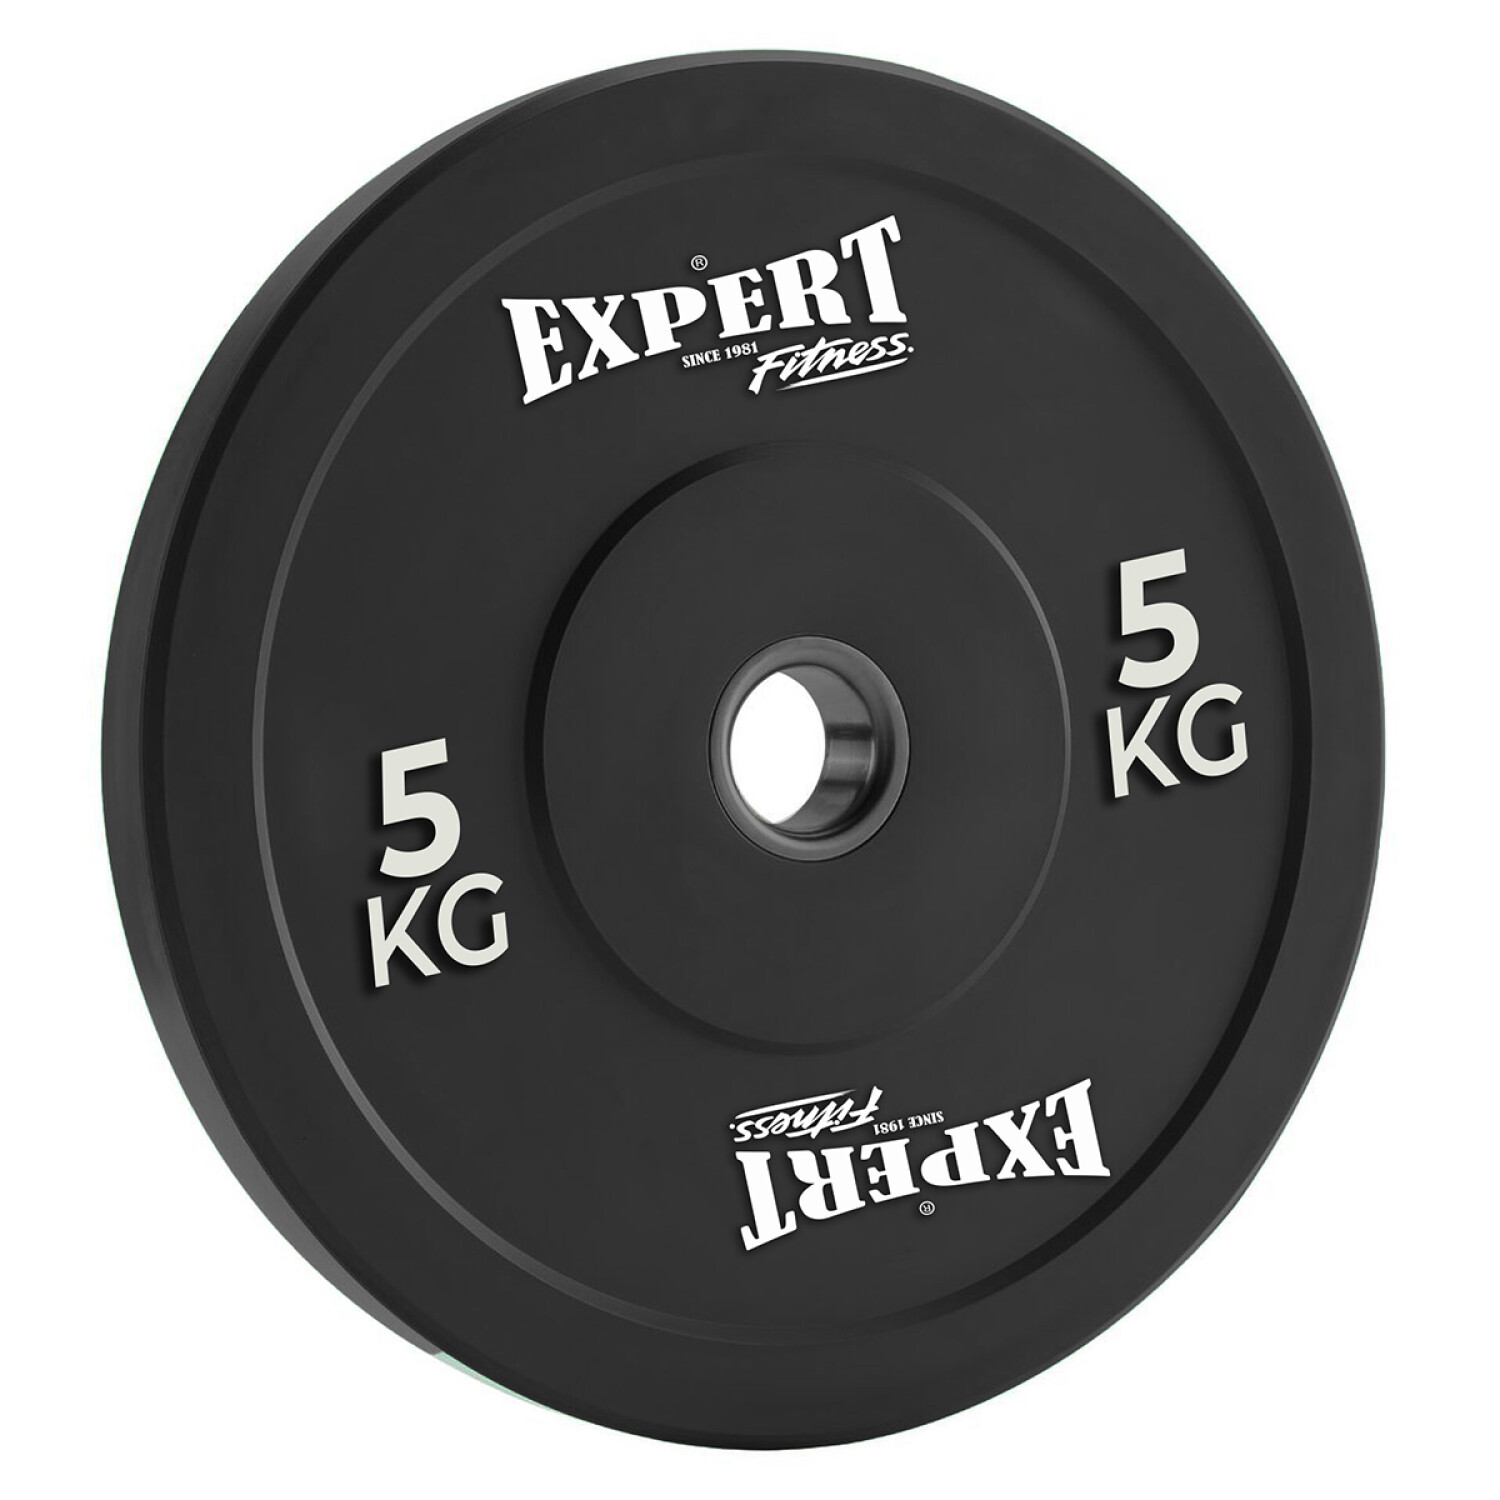 Juego de discos olímpicos de hierro fundido de 50 mm, barra de pesas,  placas de parachoques, discos 30-108 kg